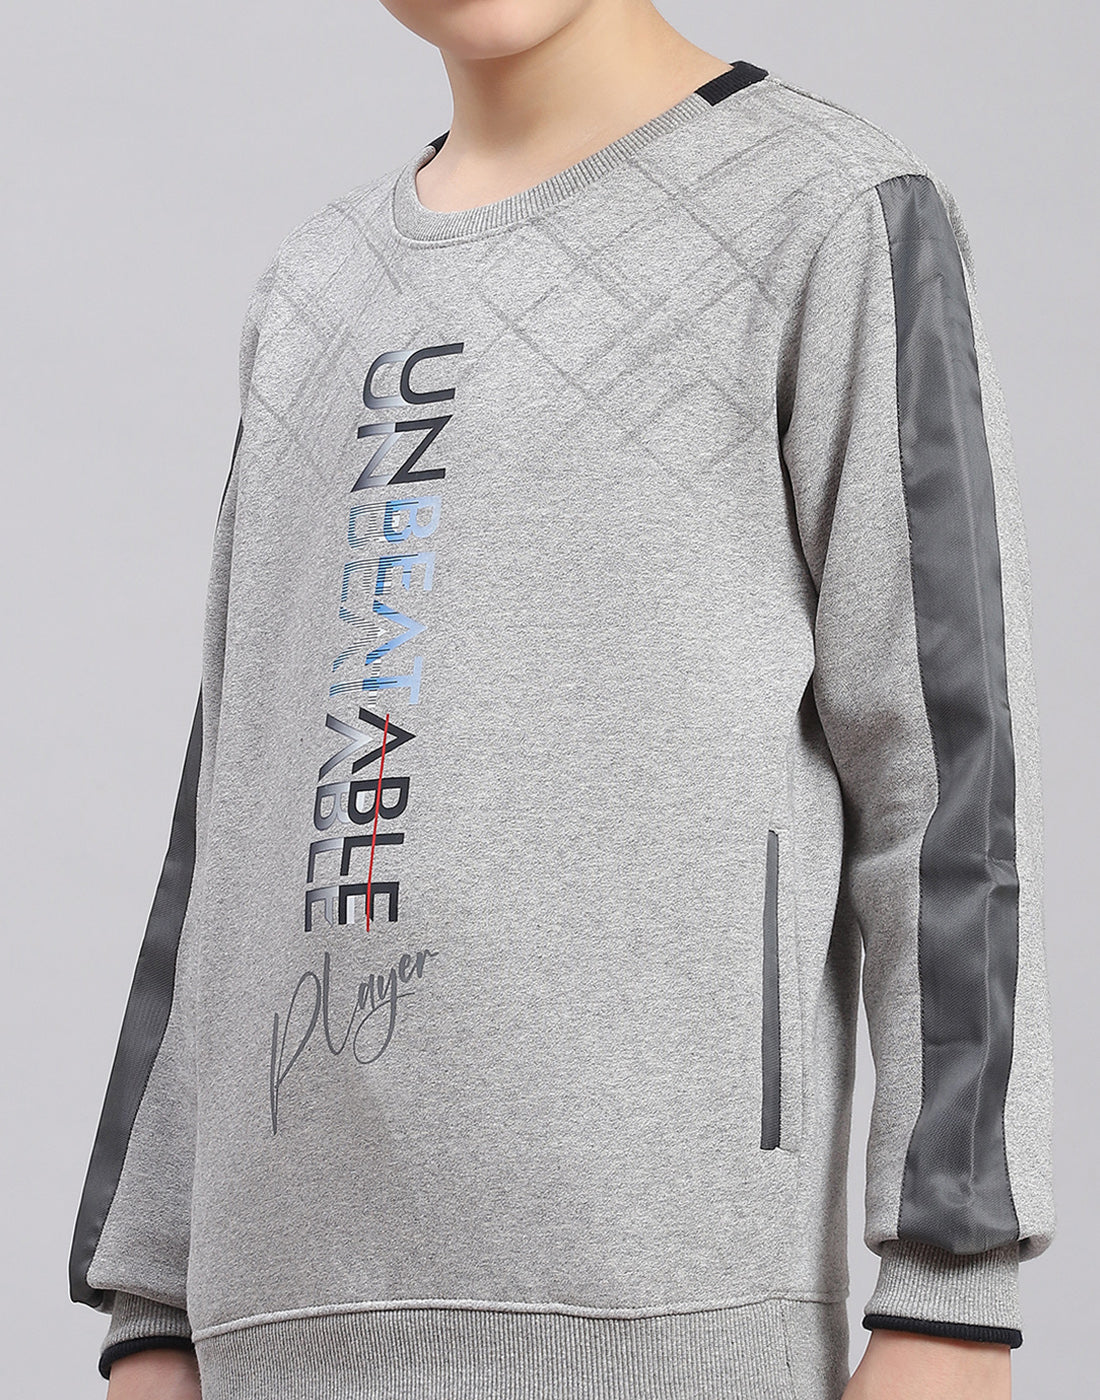 Boys Grey Melange Printed Round Neck Full Sleeve Sweatshirt